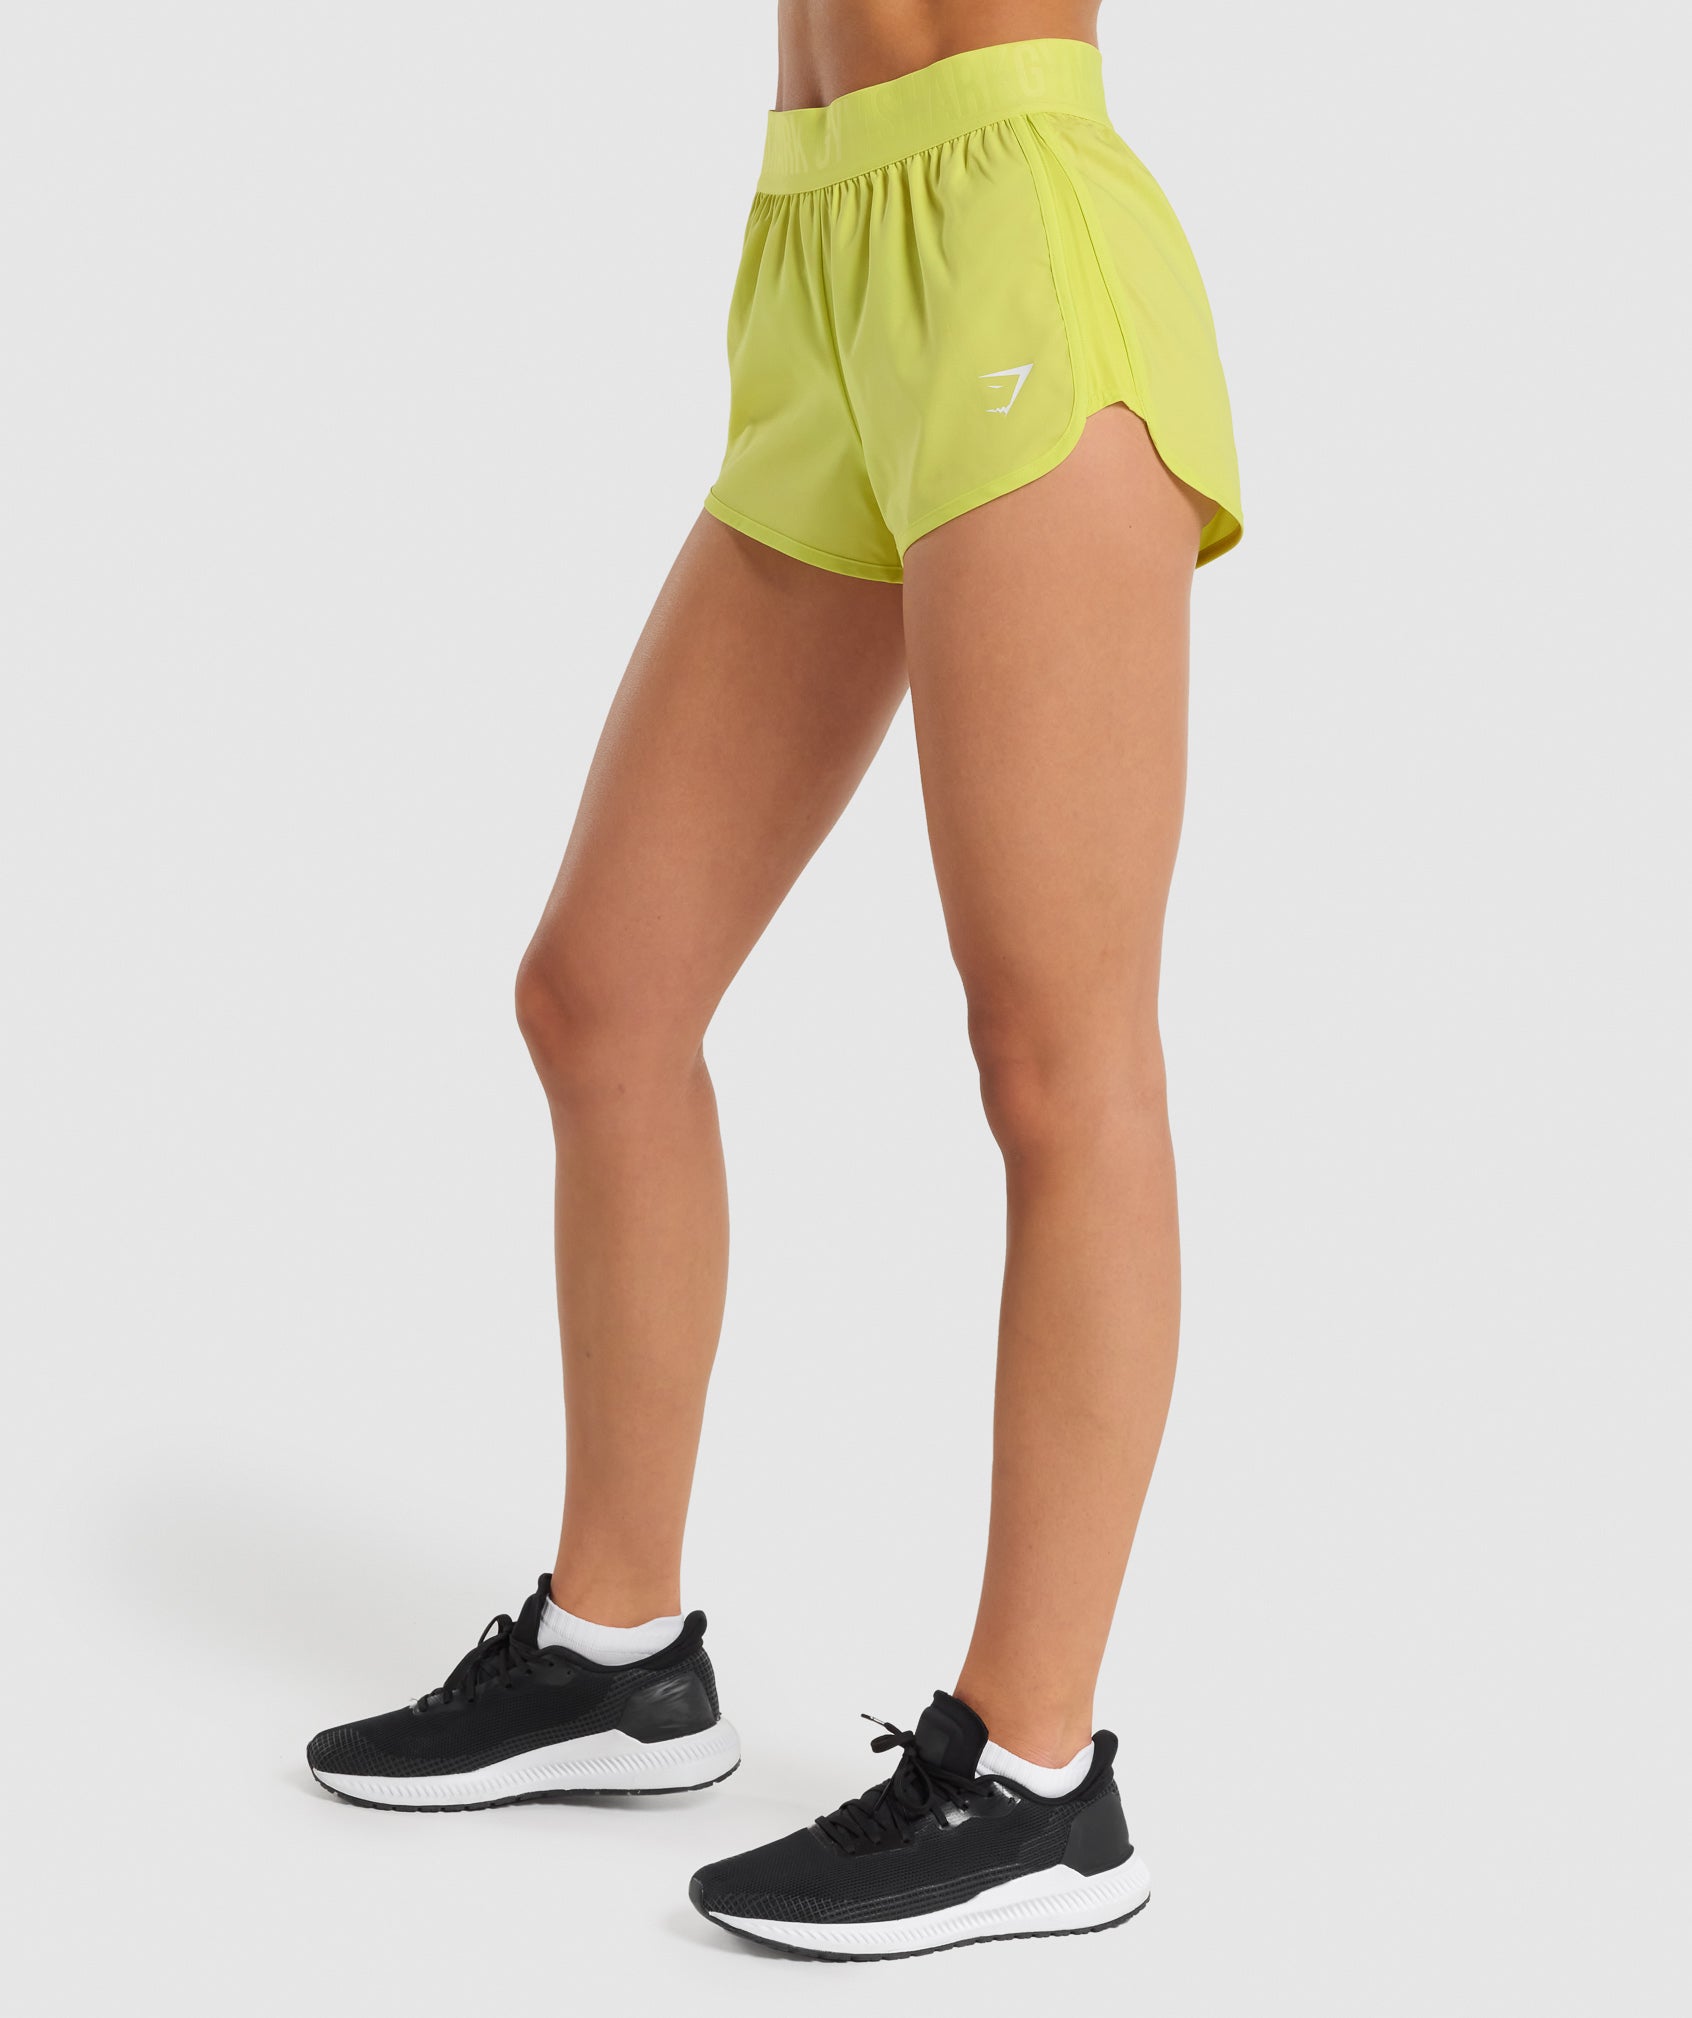 Women's 2 Inch Workout & Gym Shorts - Gymshark